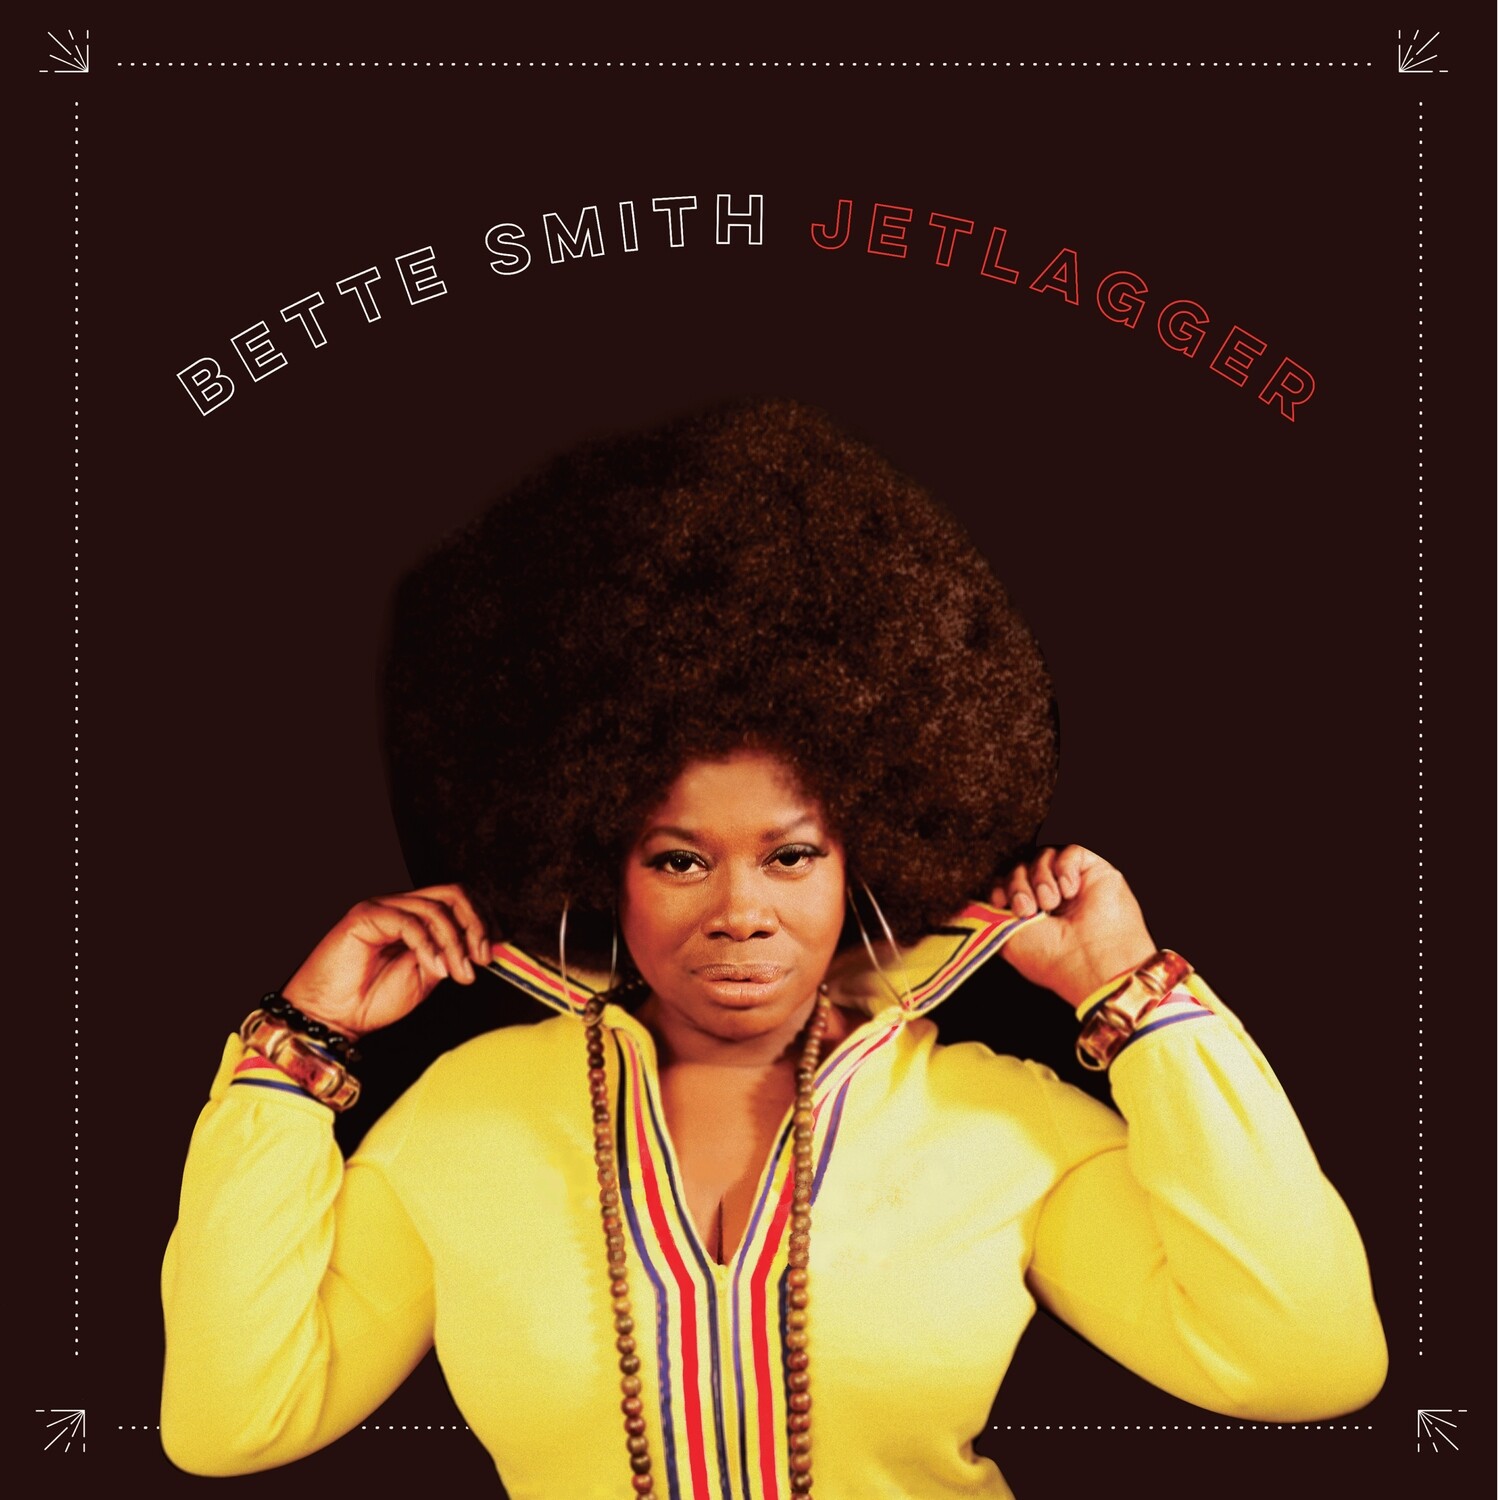 Bette Smith - Limited Edition Vinyl "Jetlagger" (custom autograph)